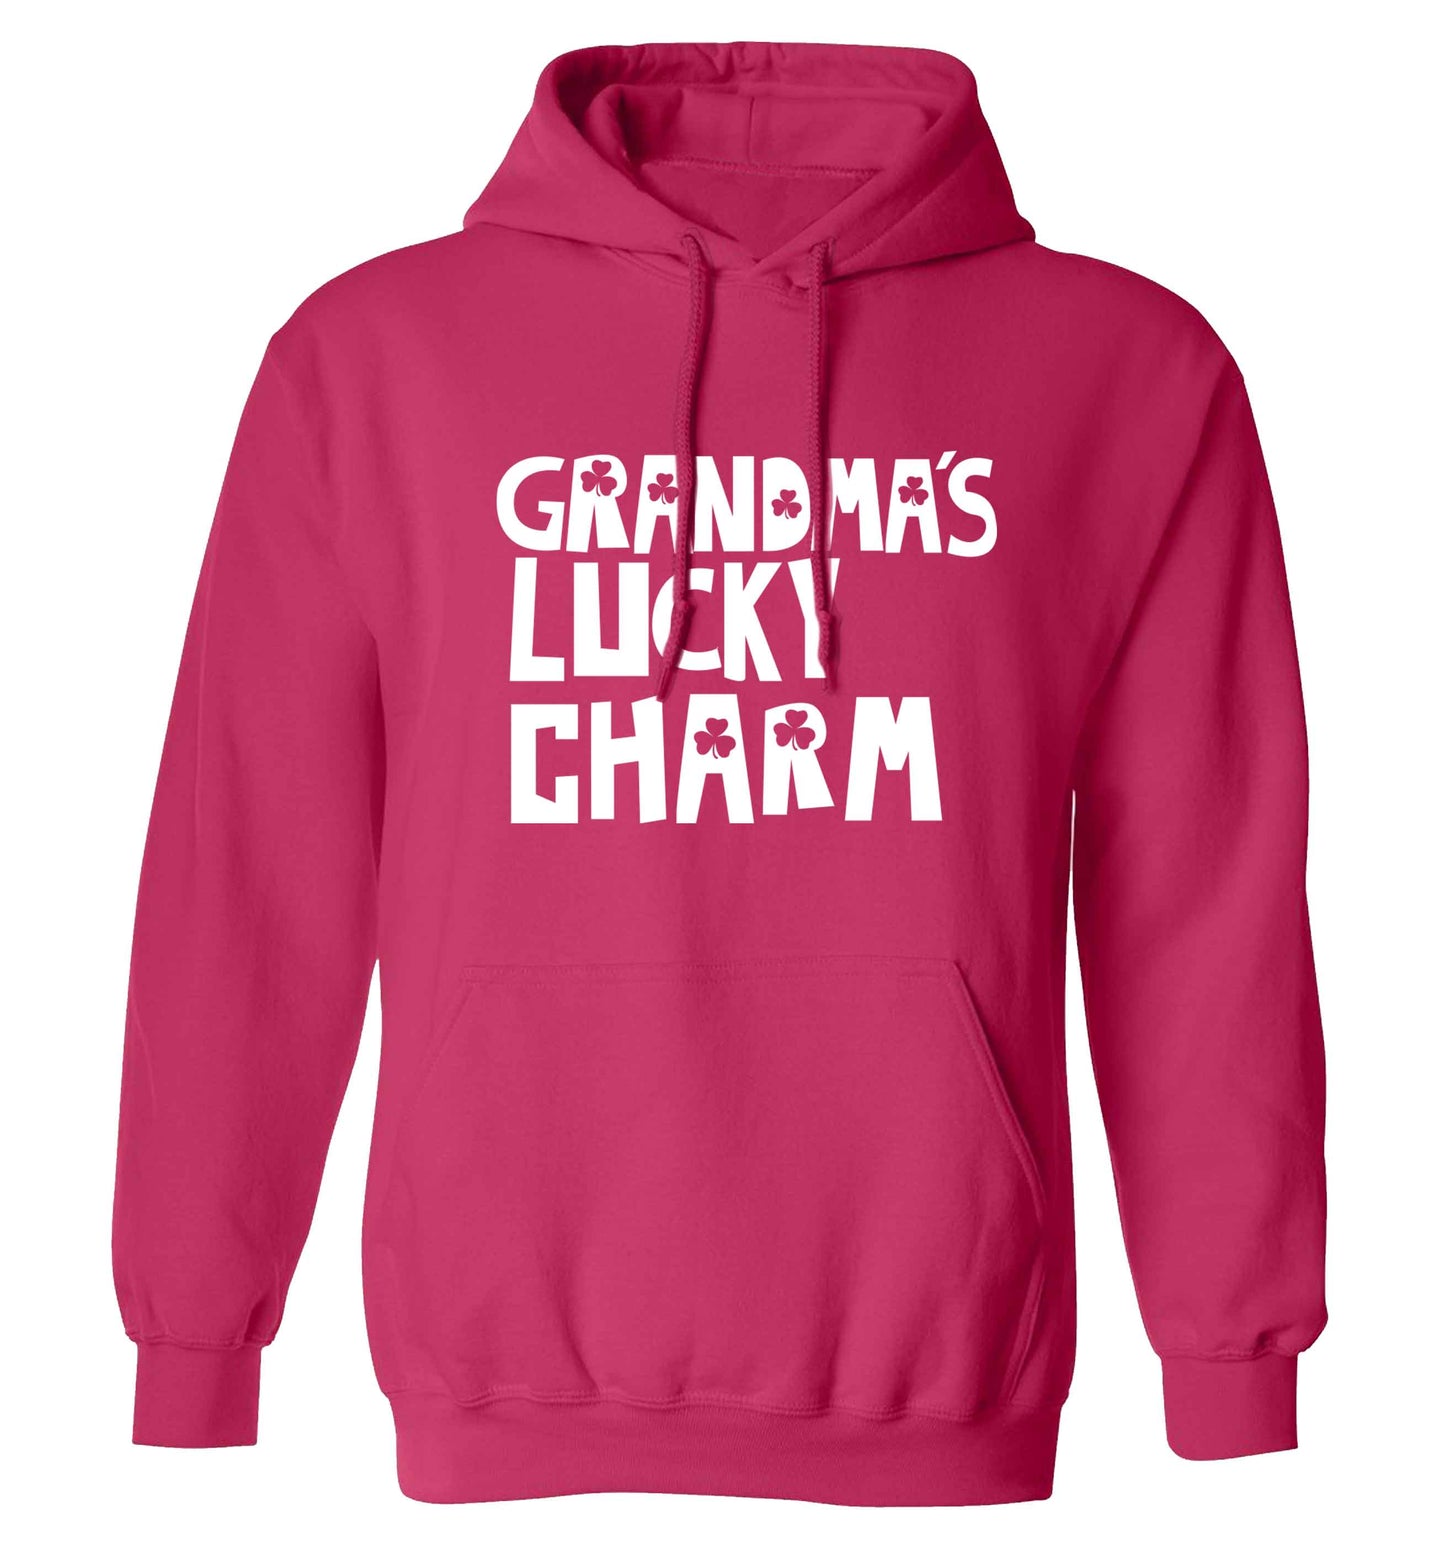 Grandma's lucky charm adults unisex pink hoodie 2XL